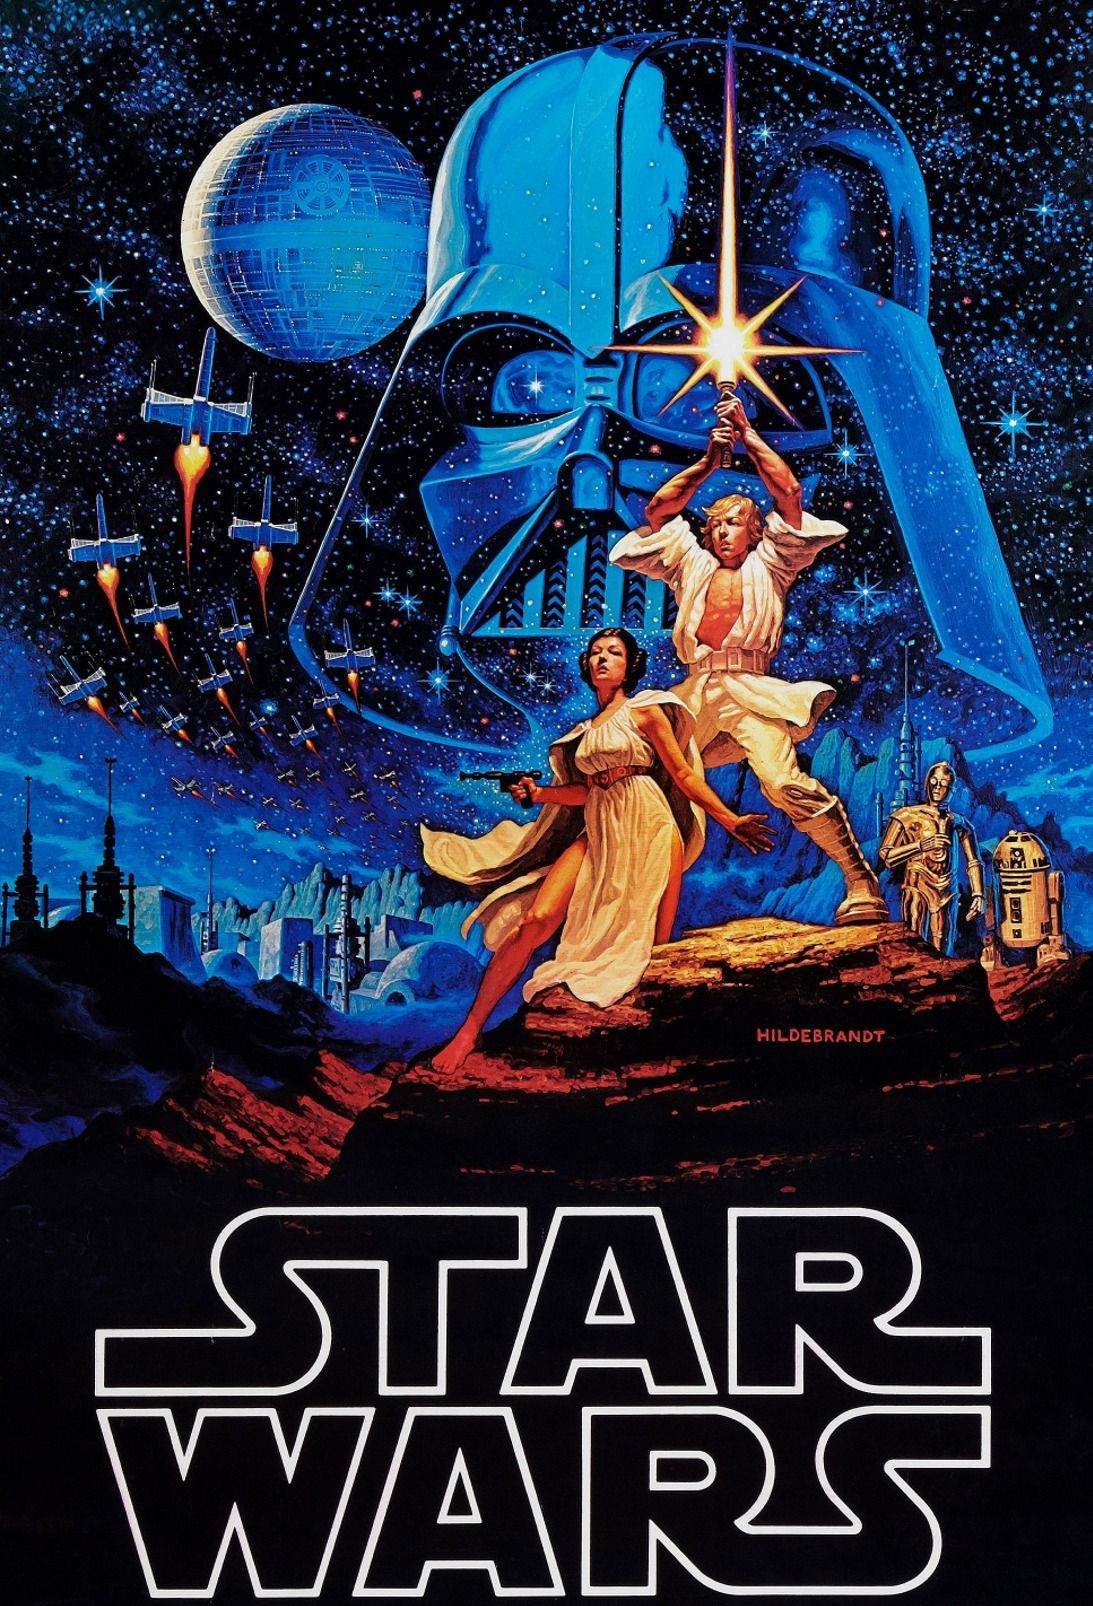 Star Wars High Resolution Wallpaper. Star wars movies posters, Star wars poster, Star wars wallpaper